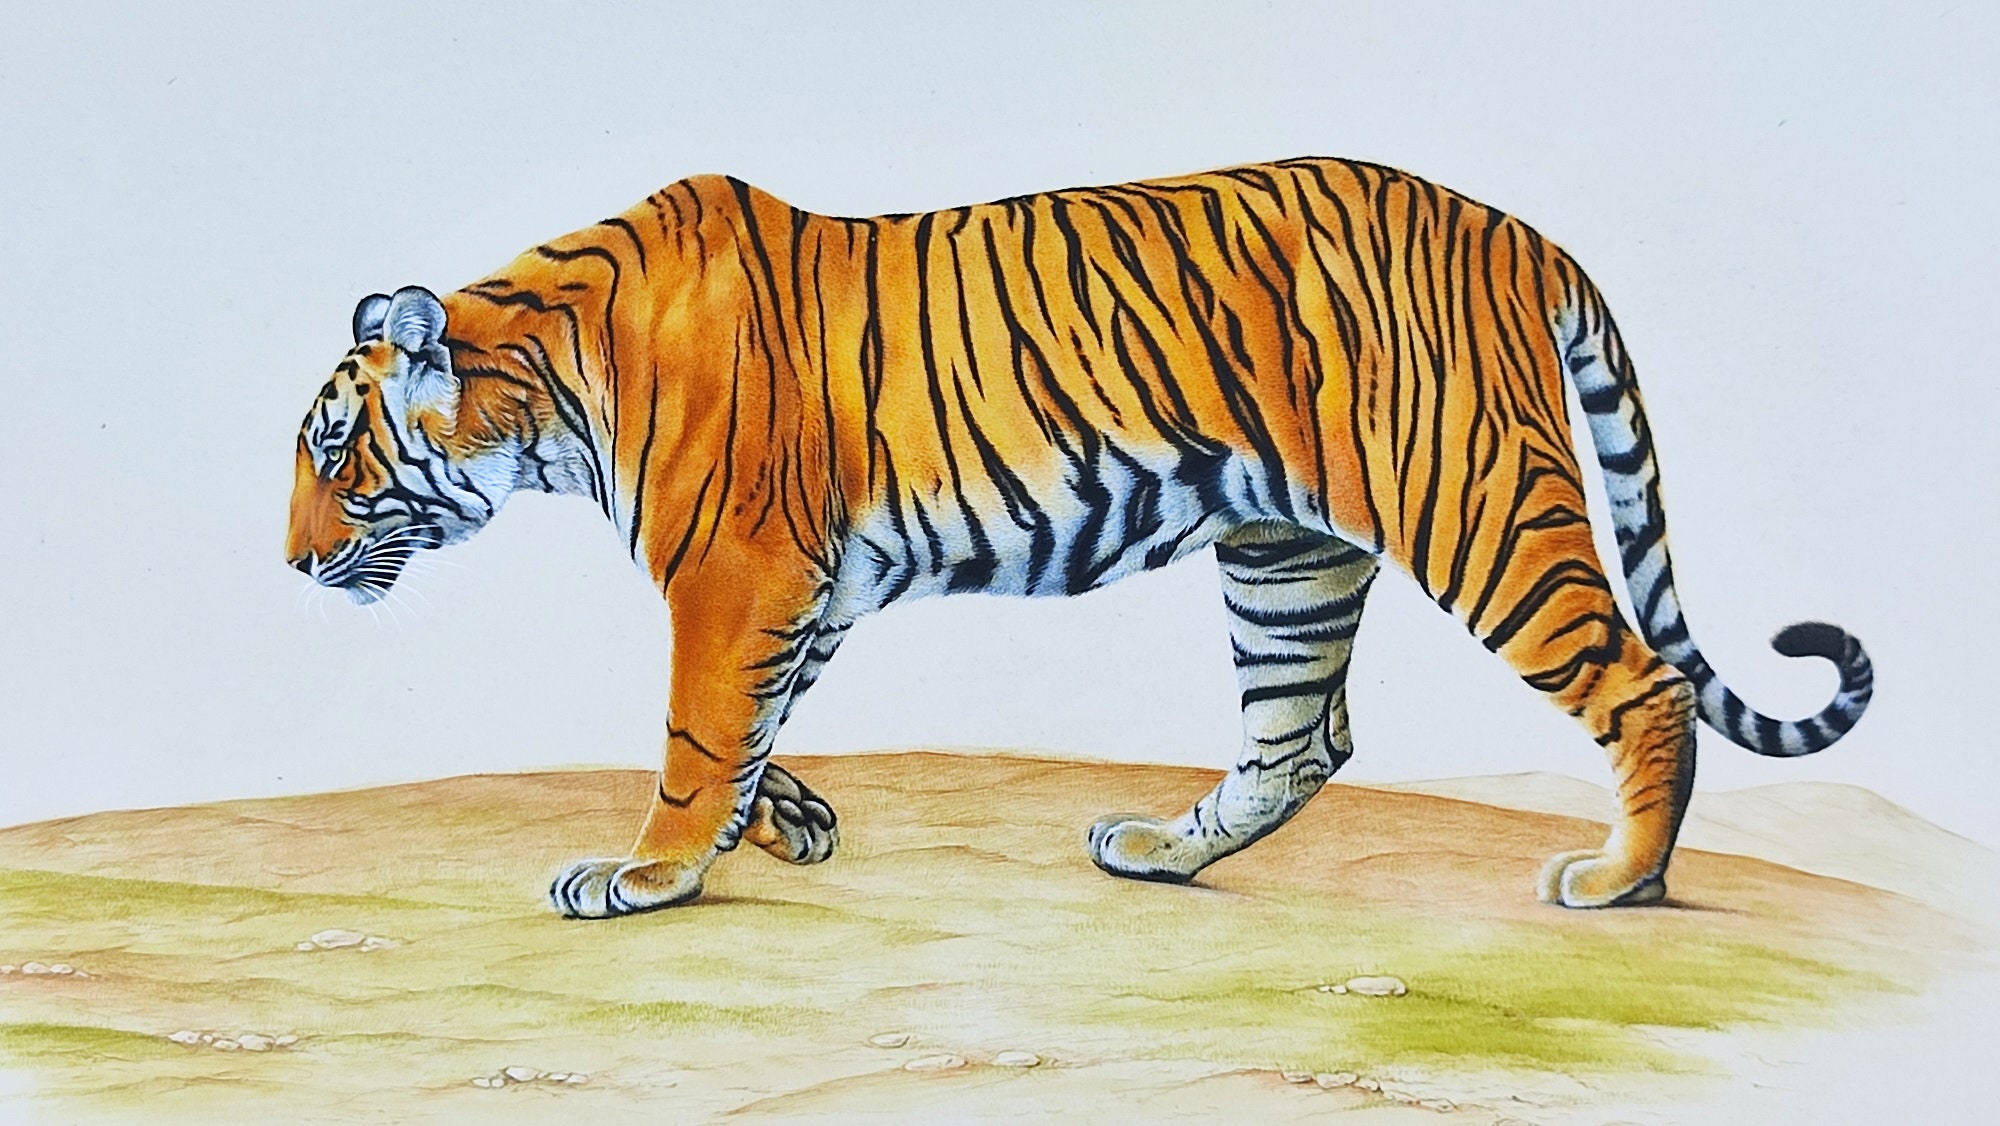 Hand Drawn Royal Bengal Tiger Cub Stock Illustration - Illustration of  drawing, kids: 76531385